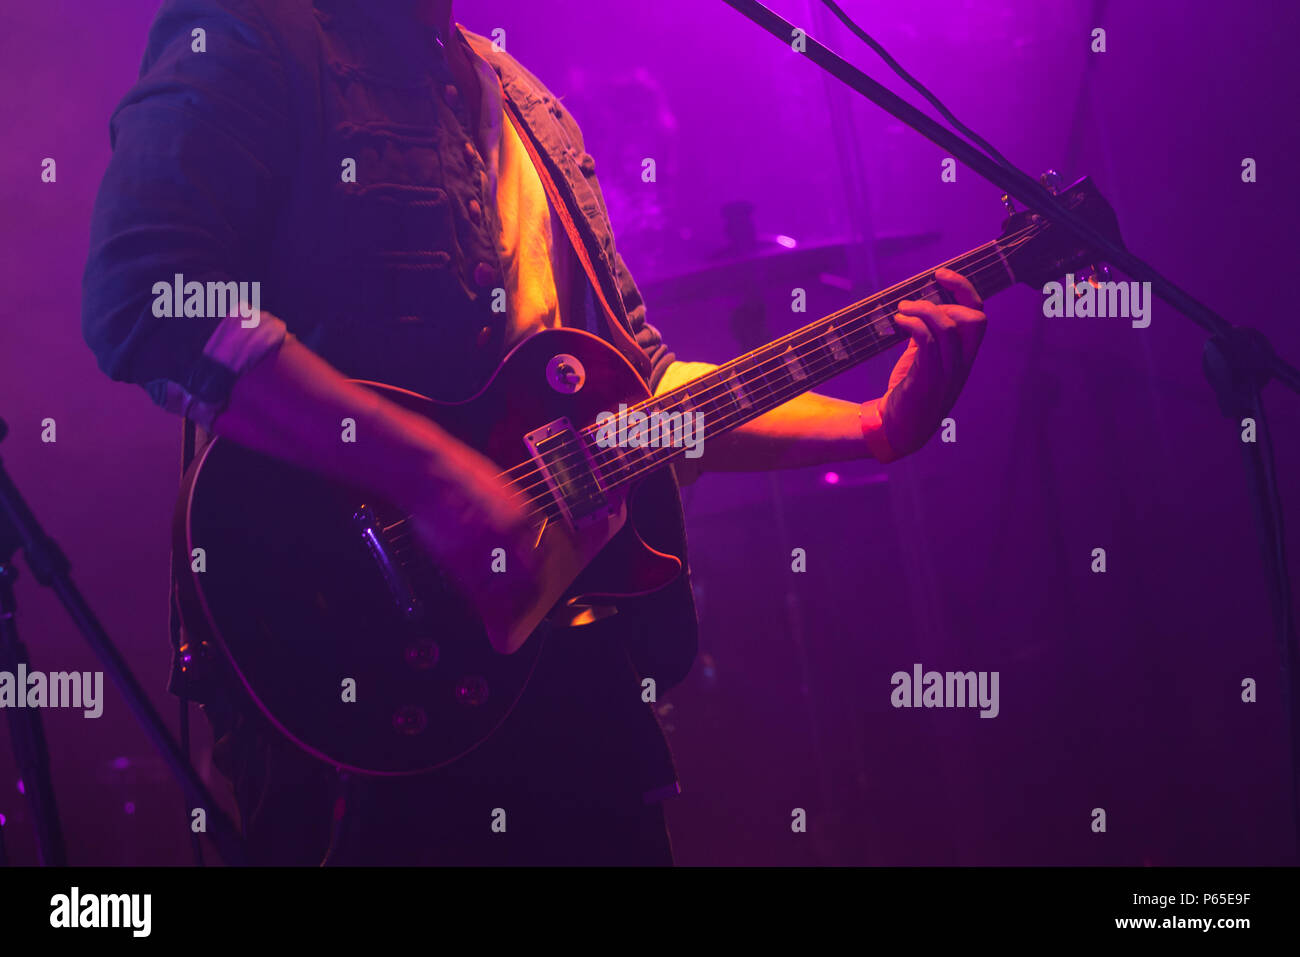 Guitarist plays on electric guitar in purple scenic illumination, soft selective focus Stock Photo